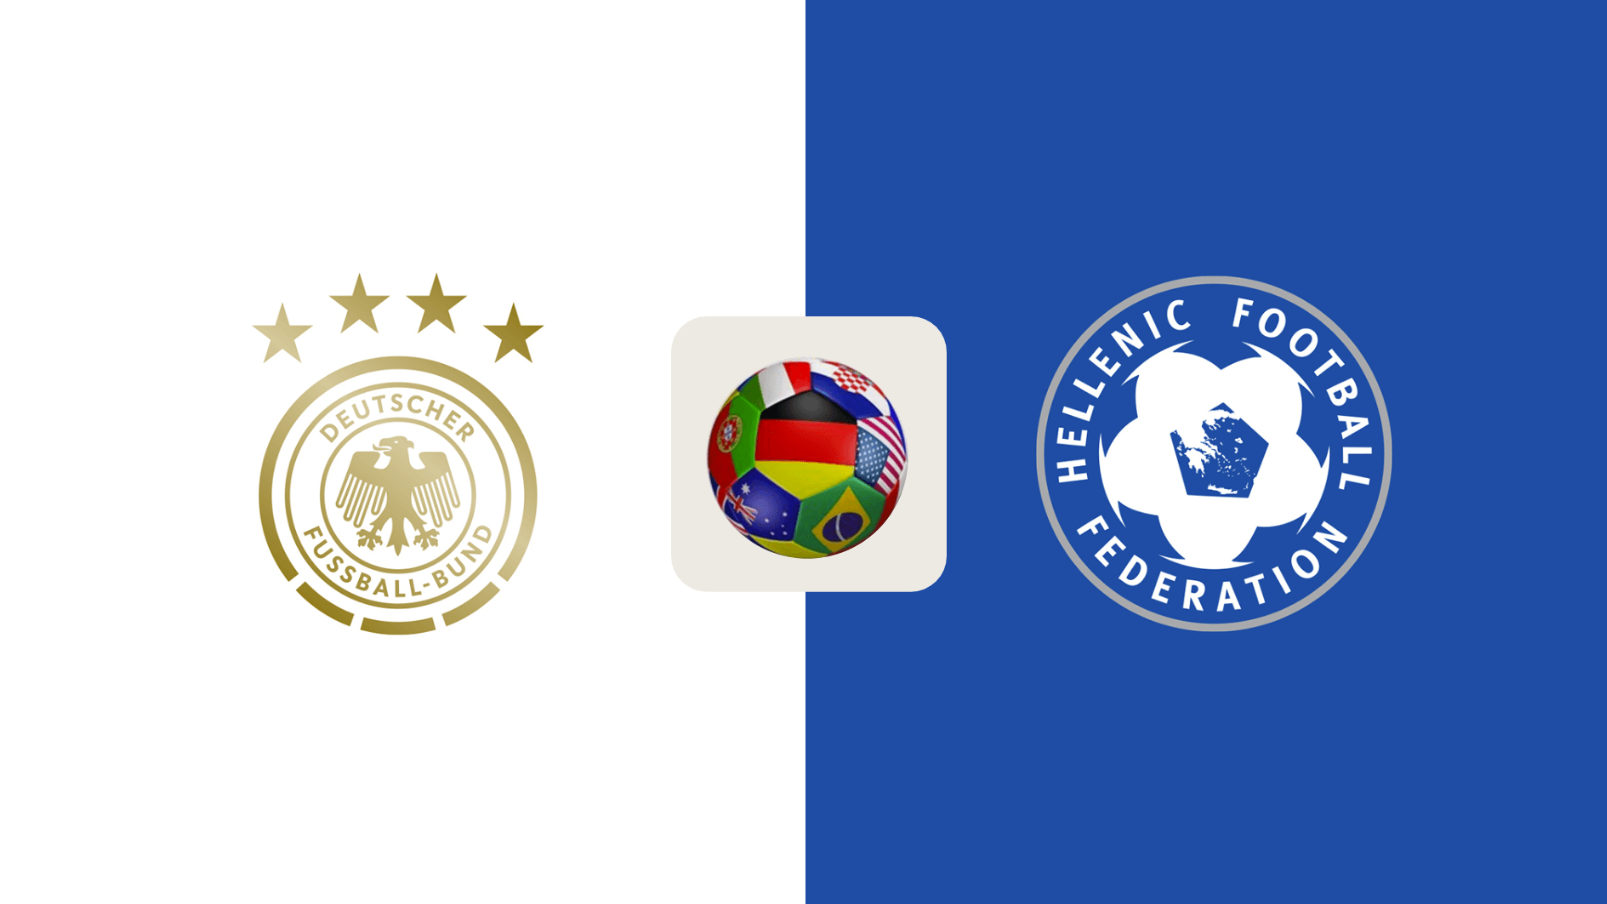 Allemagne / Grèce (Football Match Amical) Horaire, chaîne TV et Streaming ?